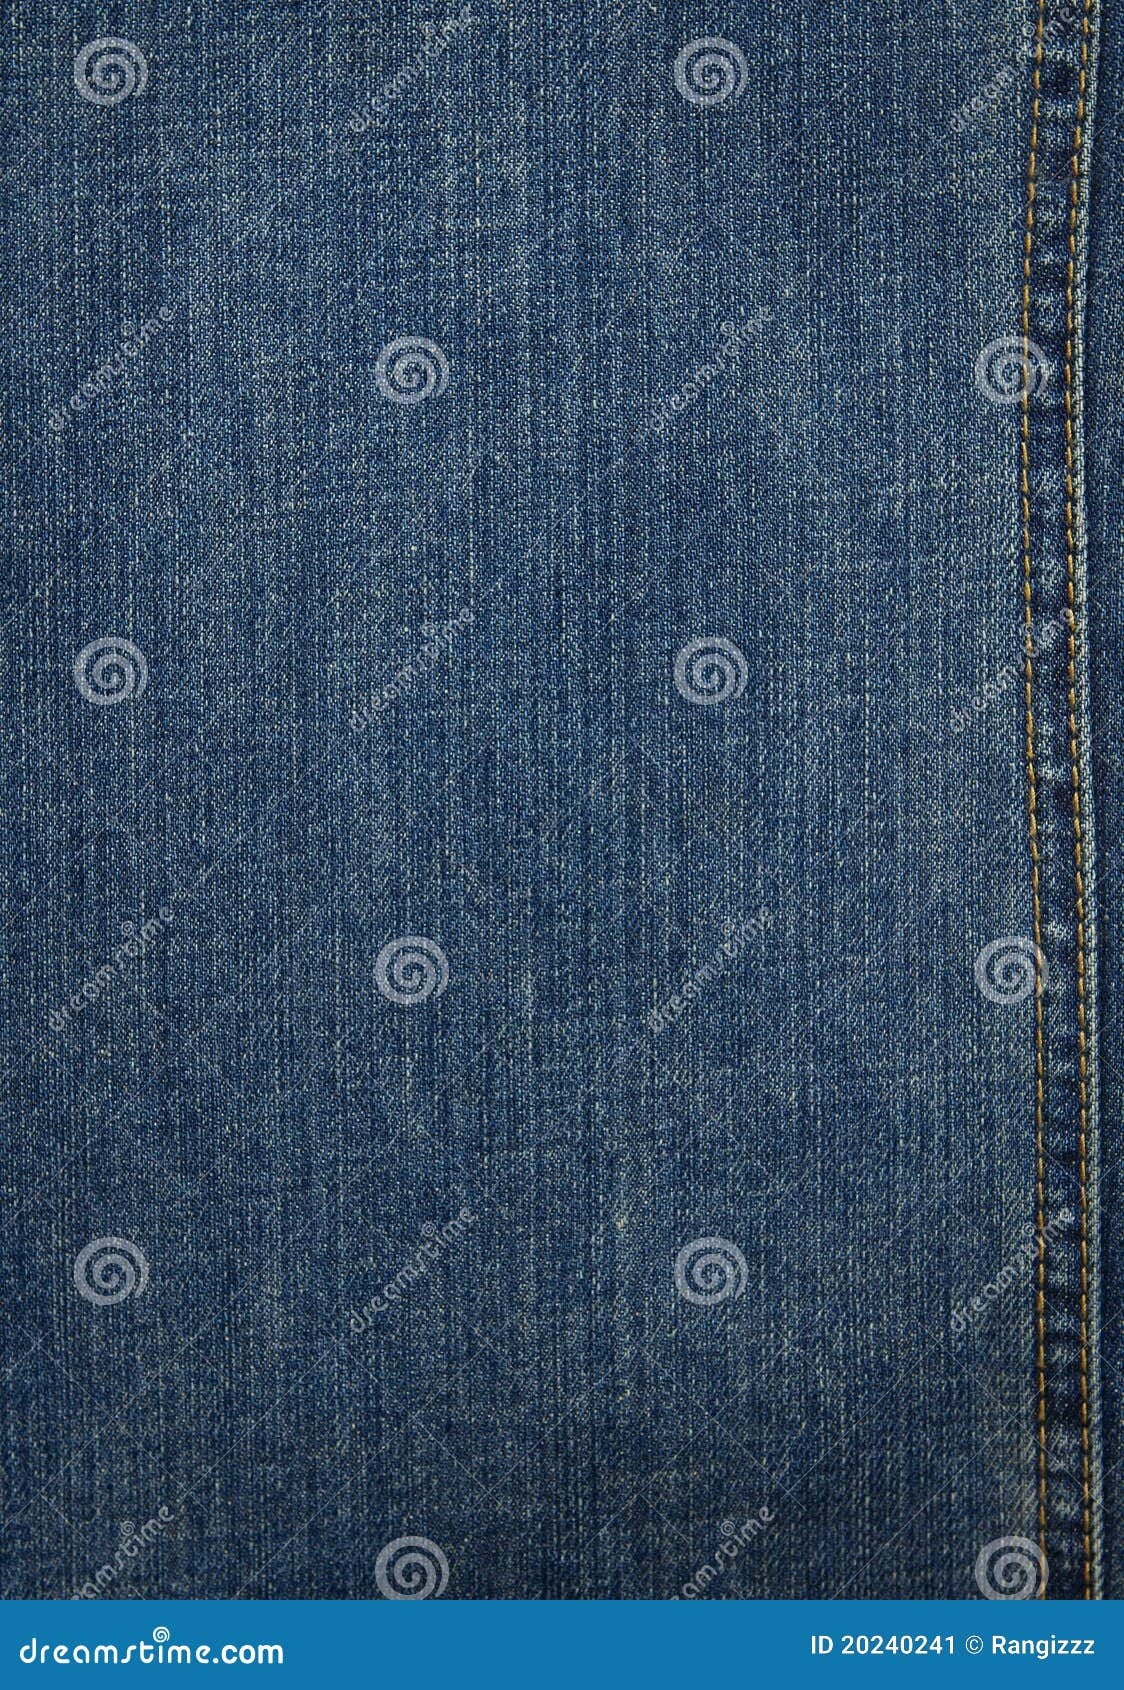 Blue denim texture stock image. Image of canvas, fashion - 20240241